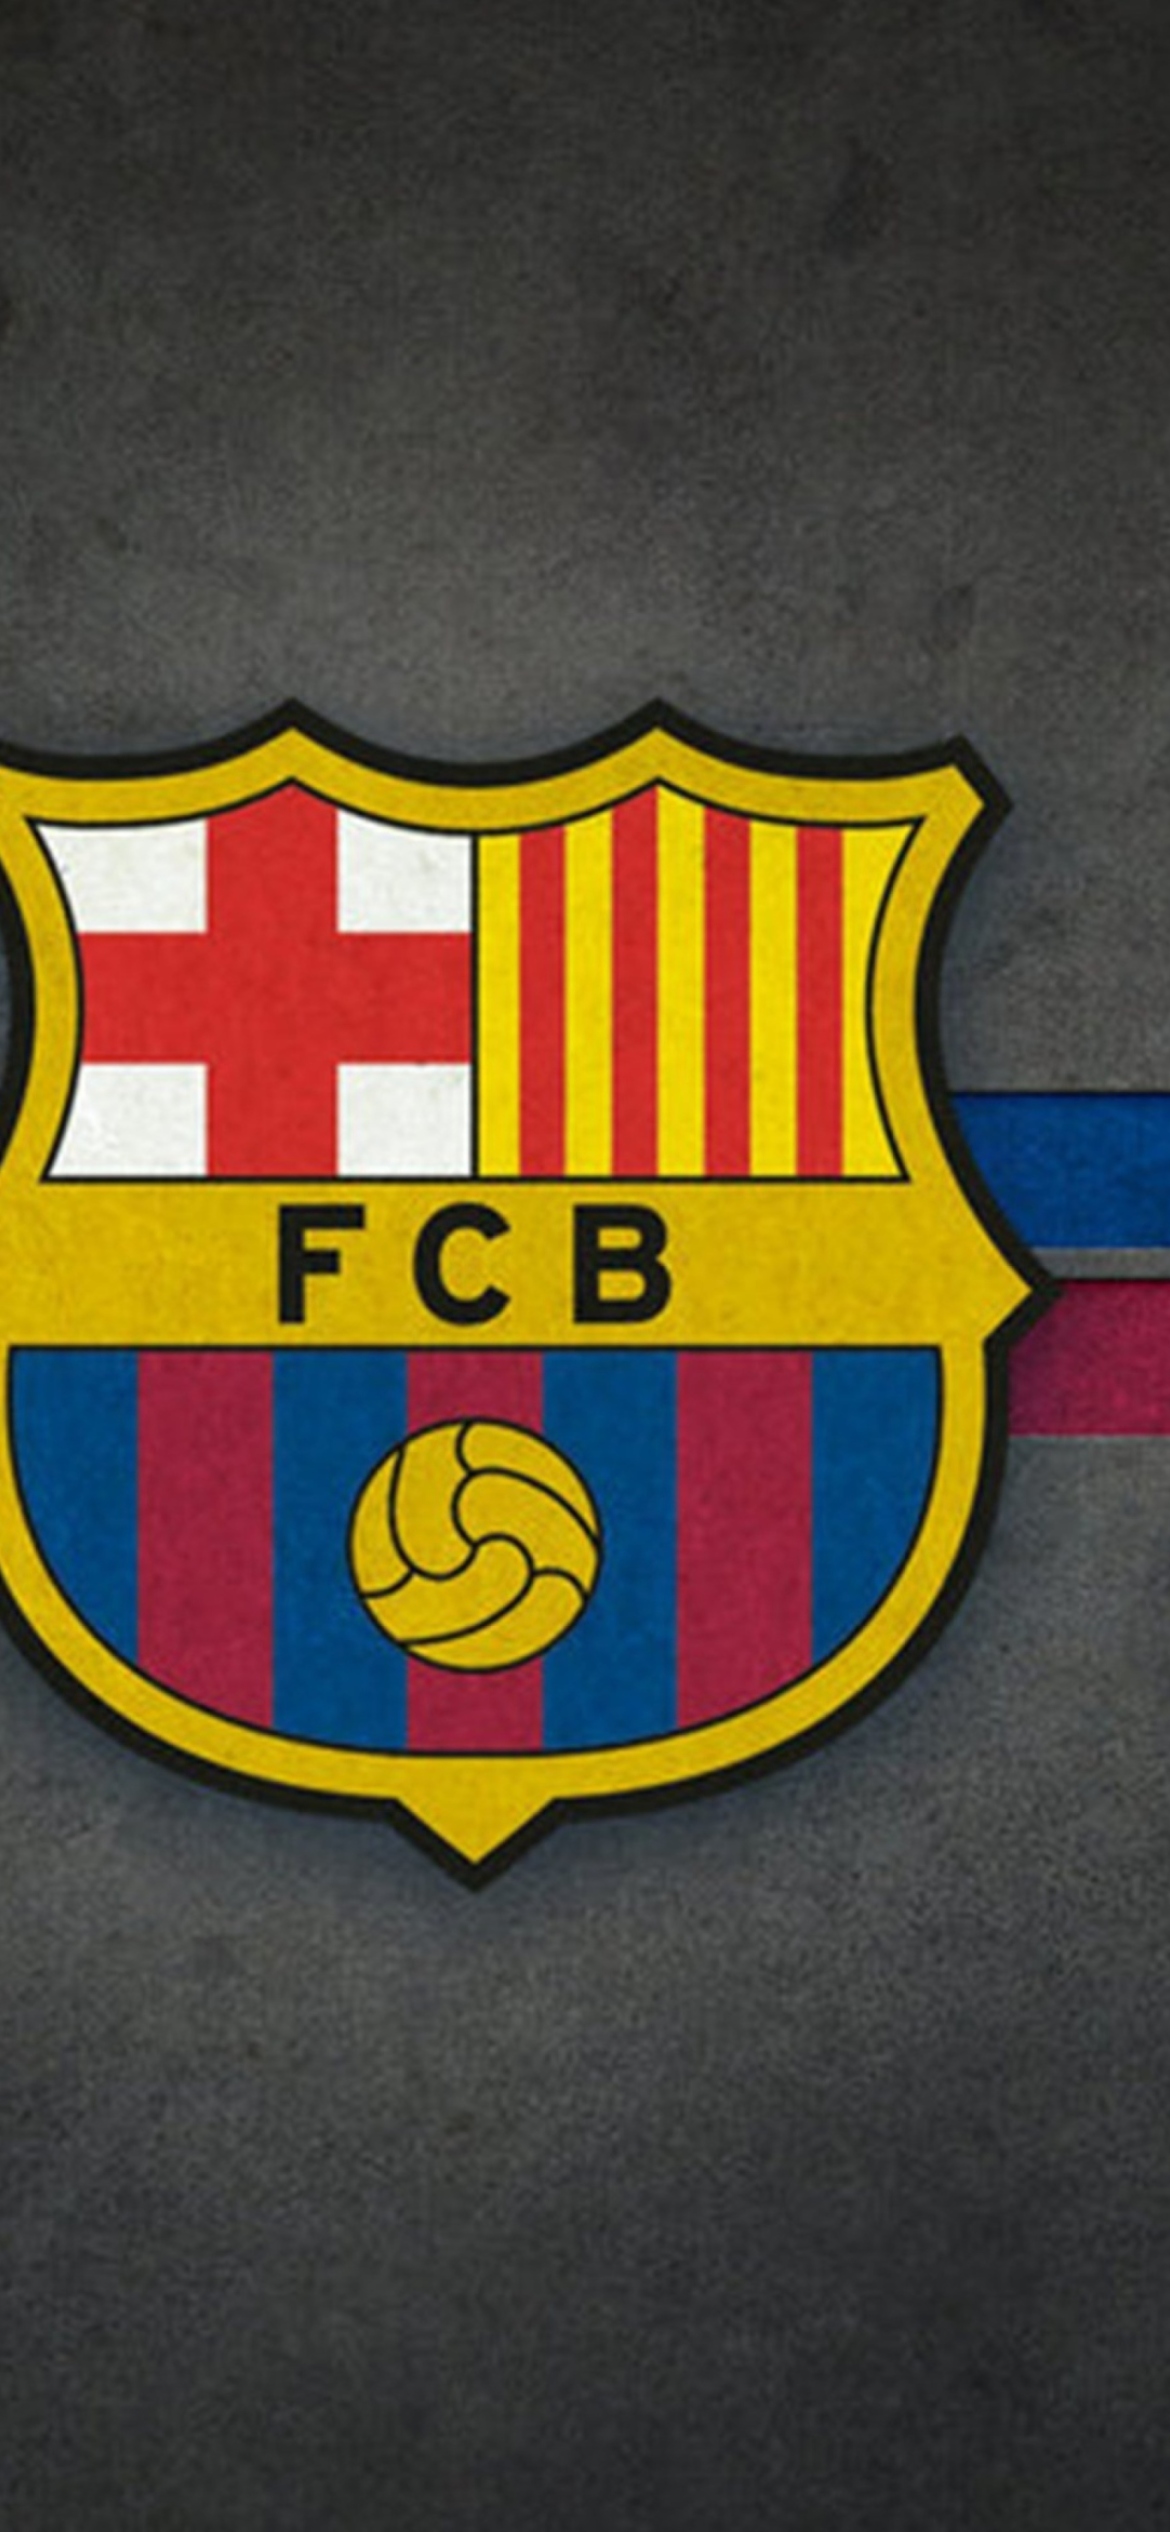 FC Barcelona wallpaper 1170x2532